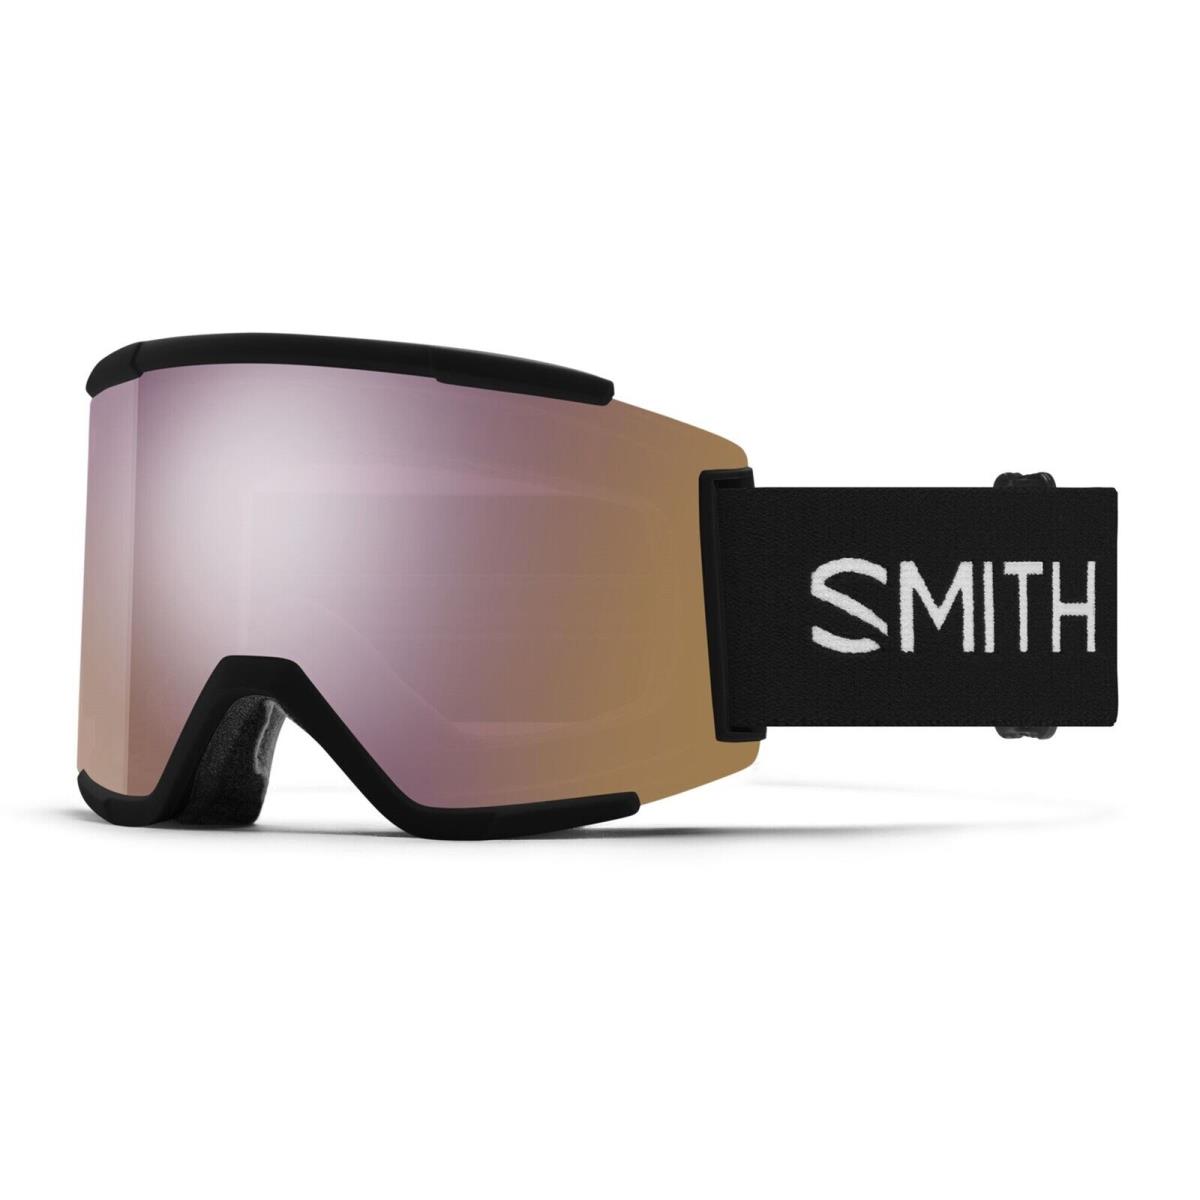 Smith Squad XL Snow Goggles Black CP Everyday Rose Gold Mirror Lens +bonus - Black, Gold